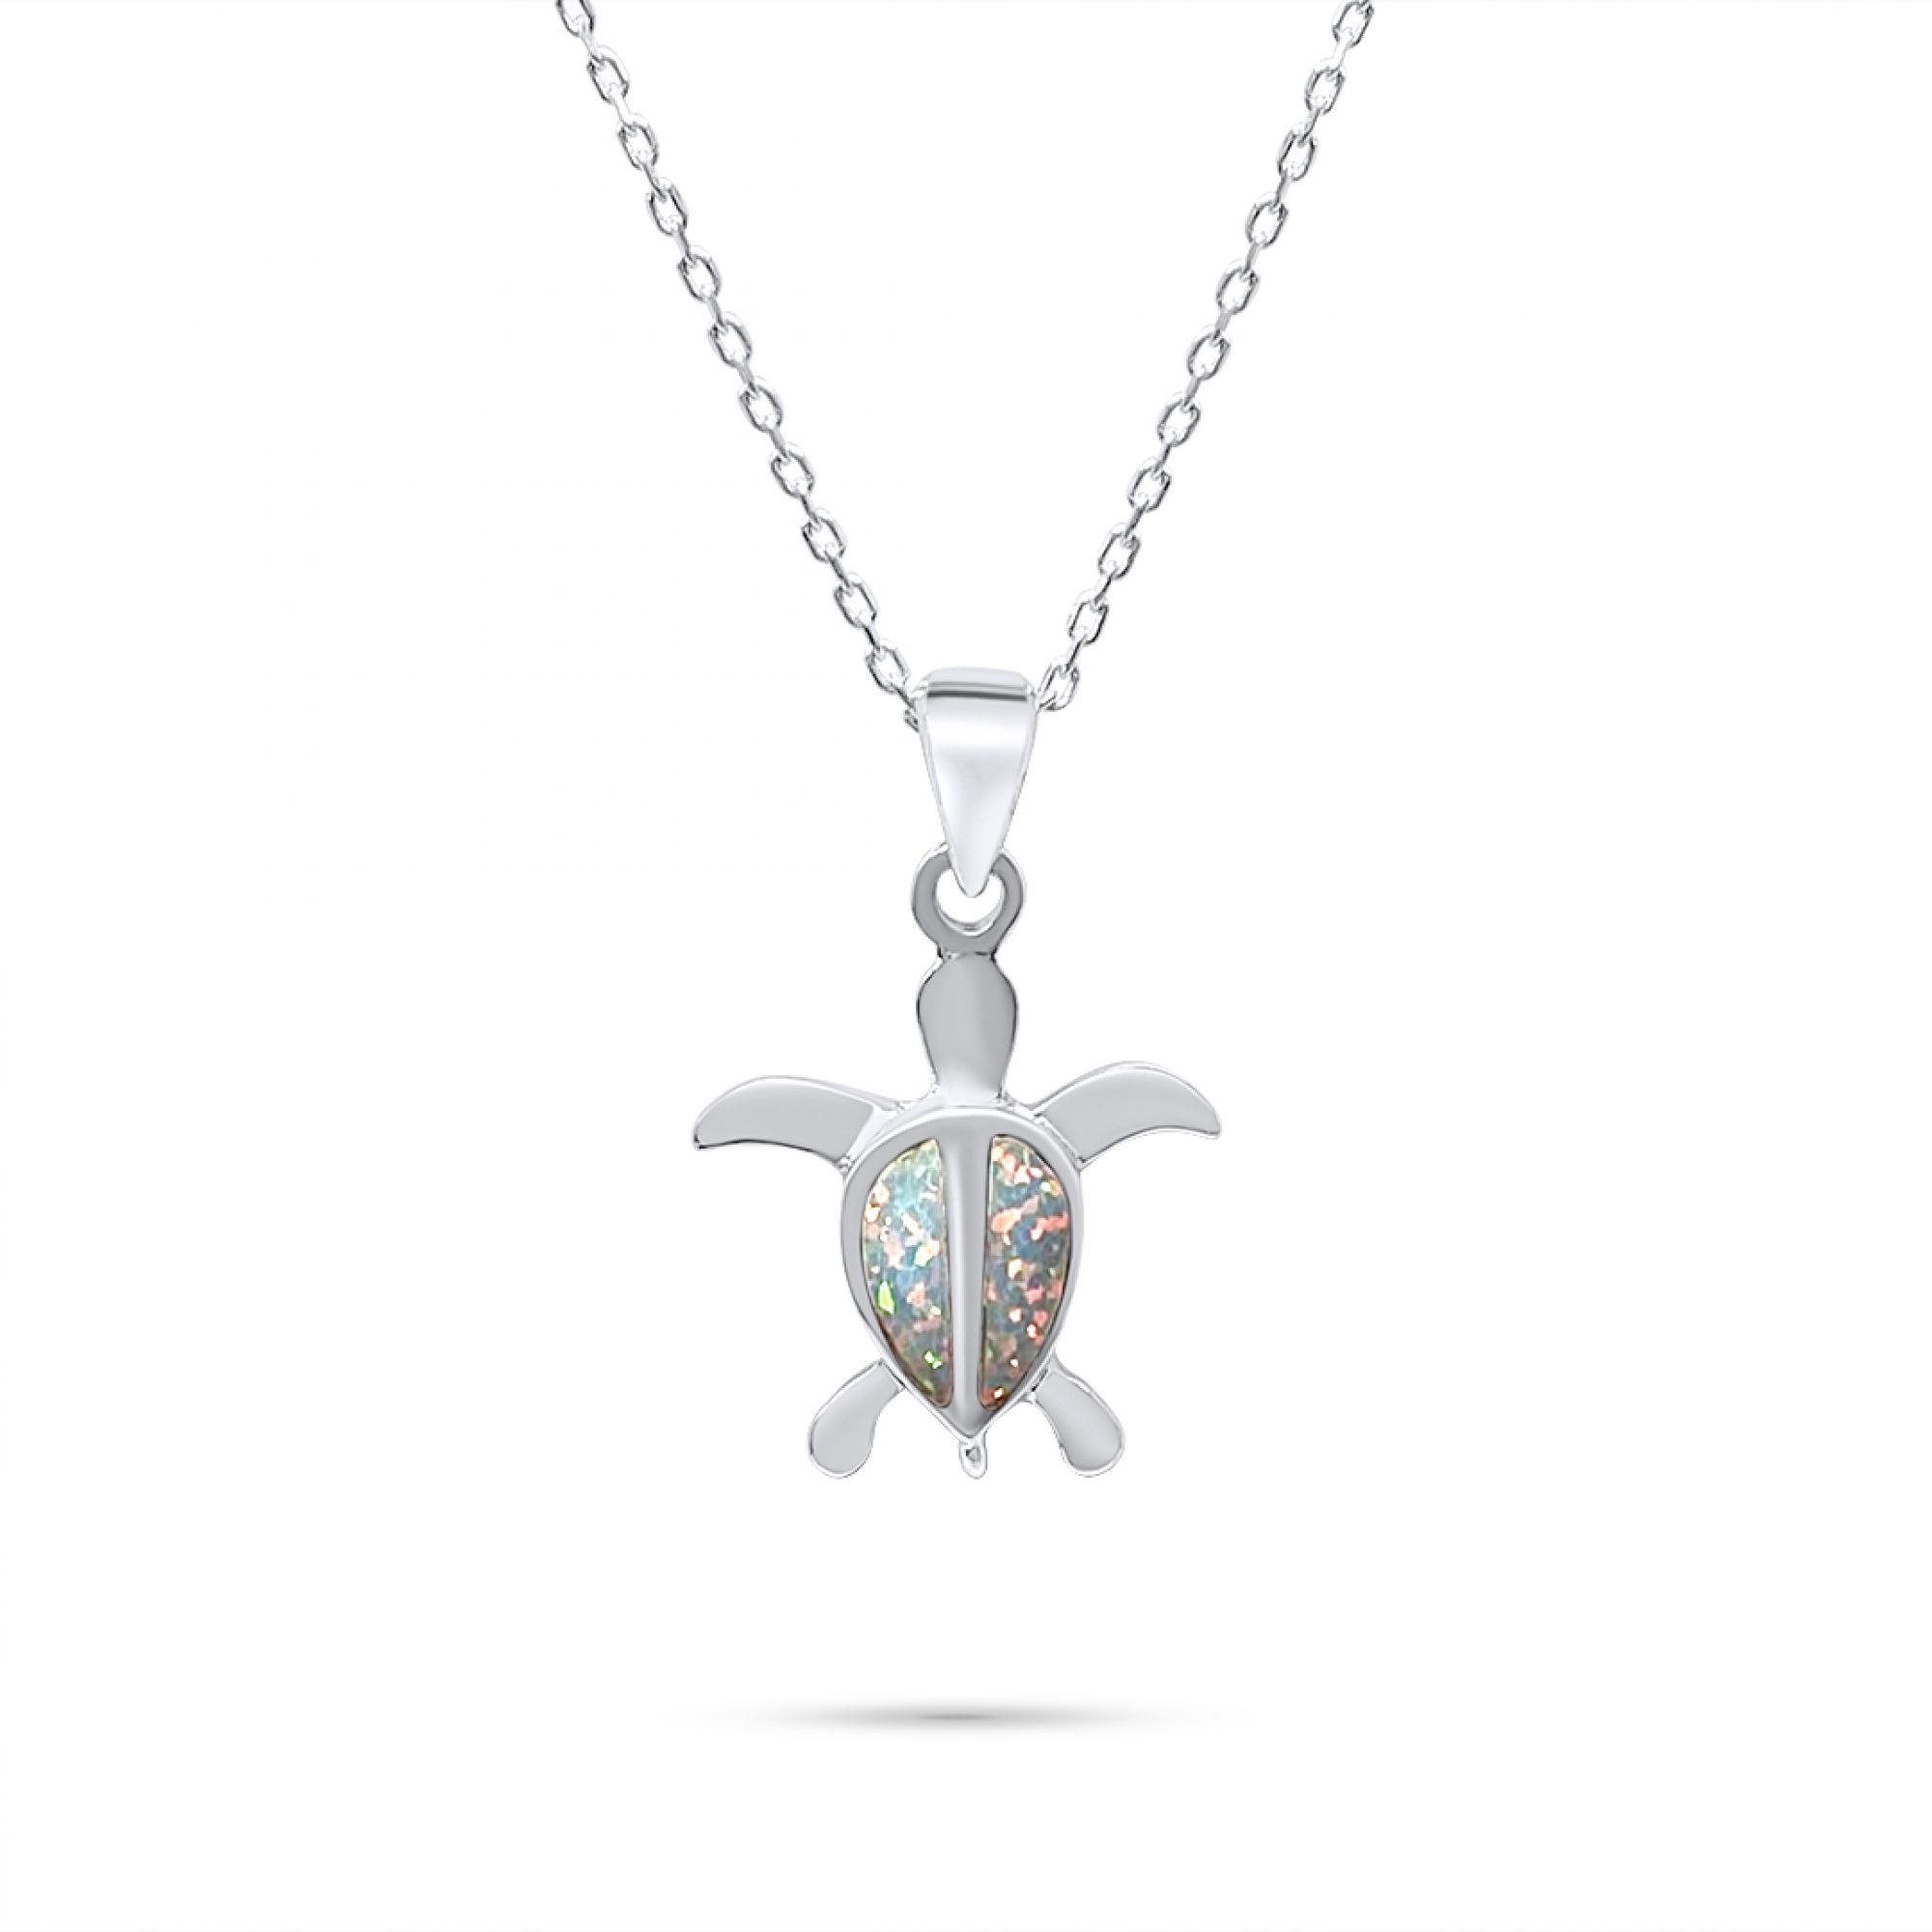 White opal turtle pendant